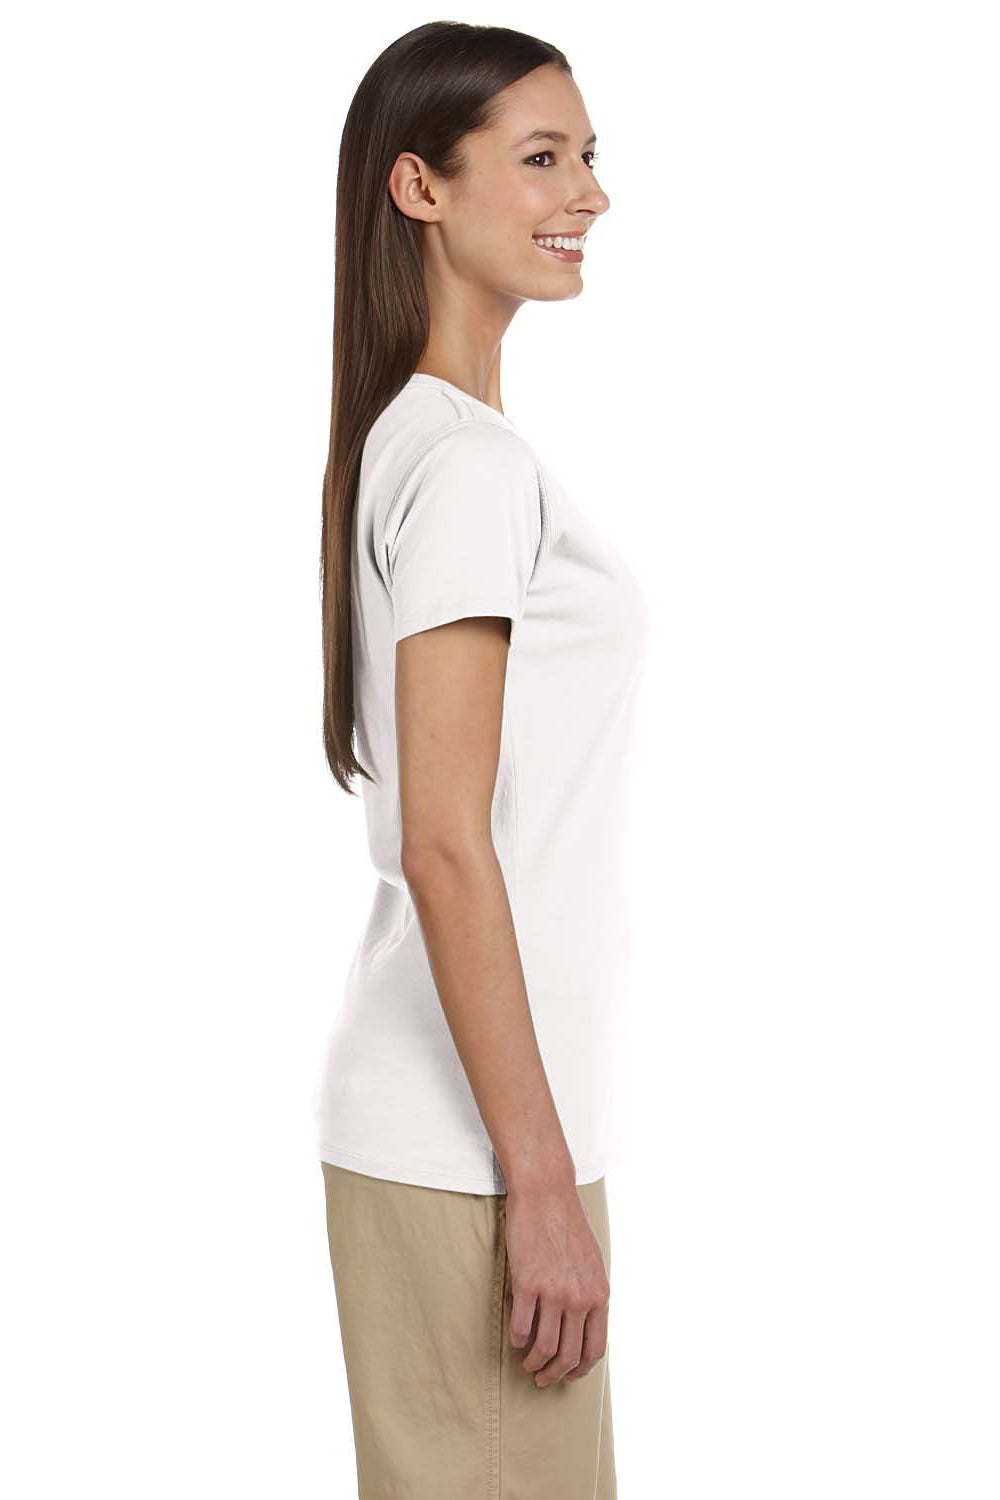 Econscious EC3052 Womens Short Sleeve V-Neck T-Shirt White Side